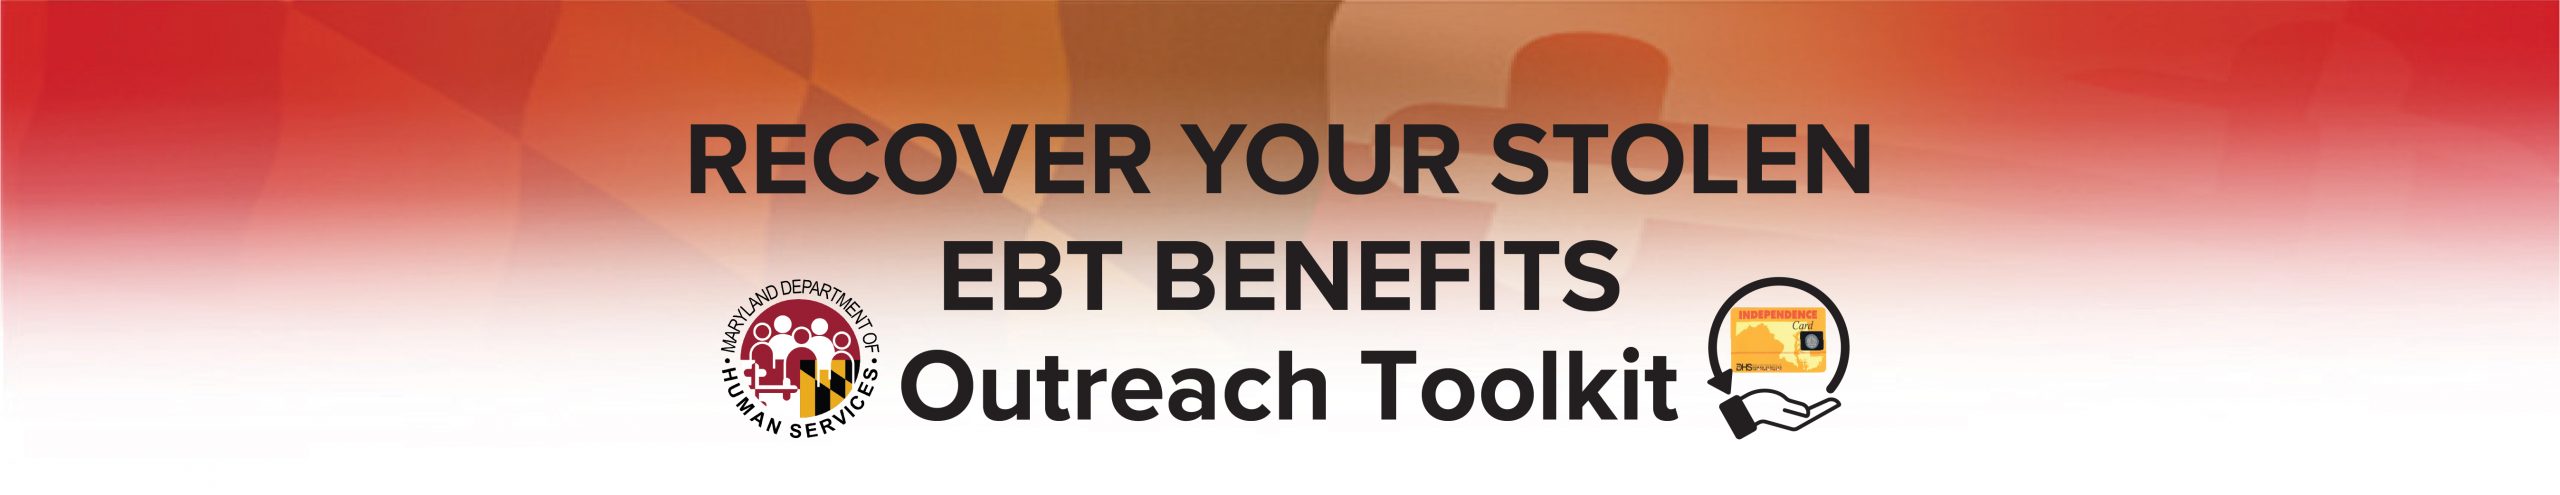 Recover Your Stolen EBT Benefits - Outreach Toolkit